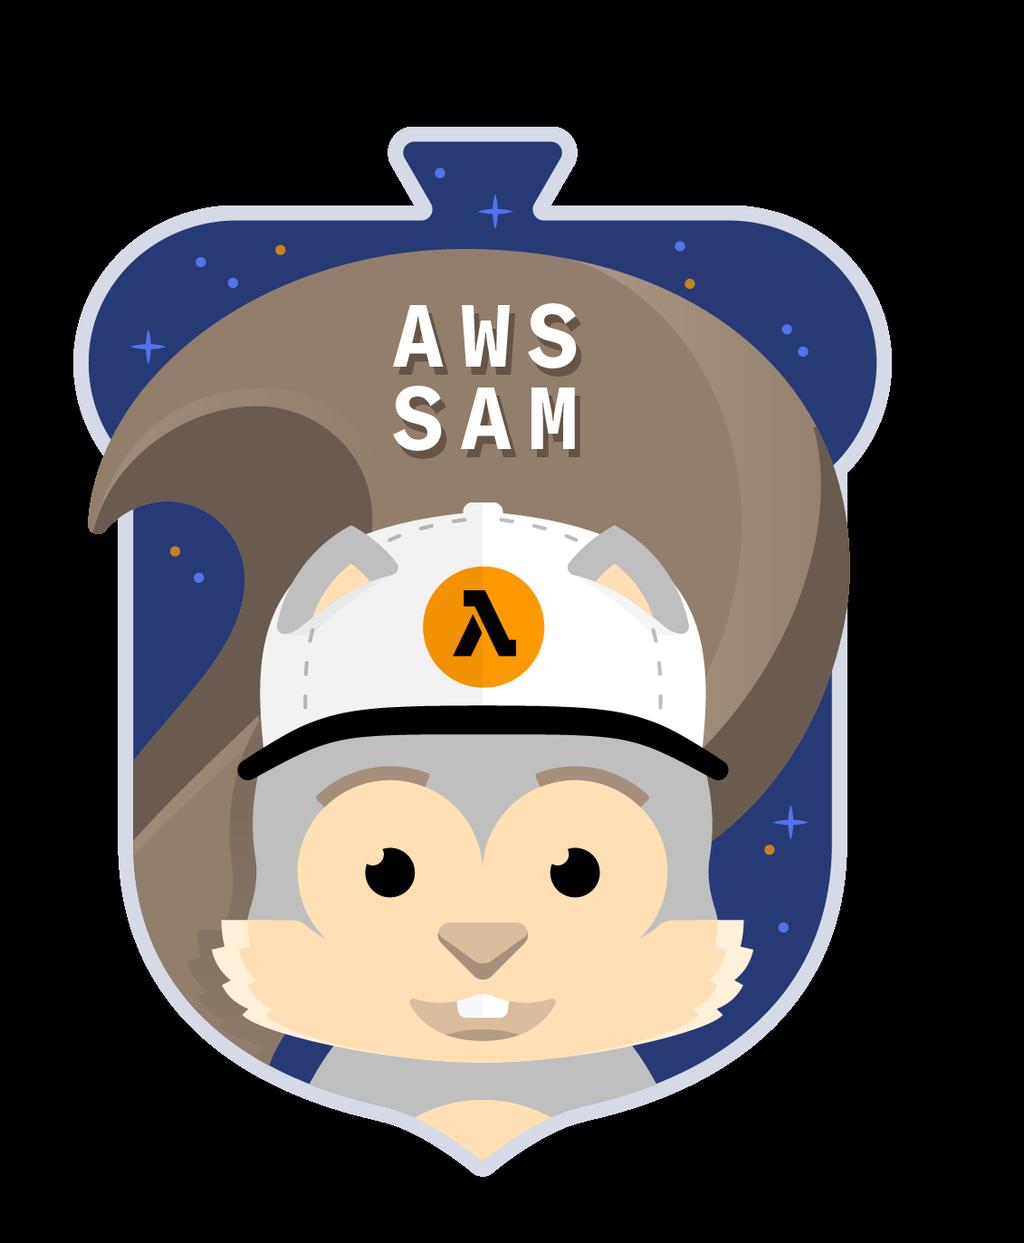 AWS Serverless Application Model (SAM) CloudFormation extension optimized for serverless New serverless resource types: functions, APIs,